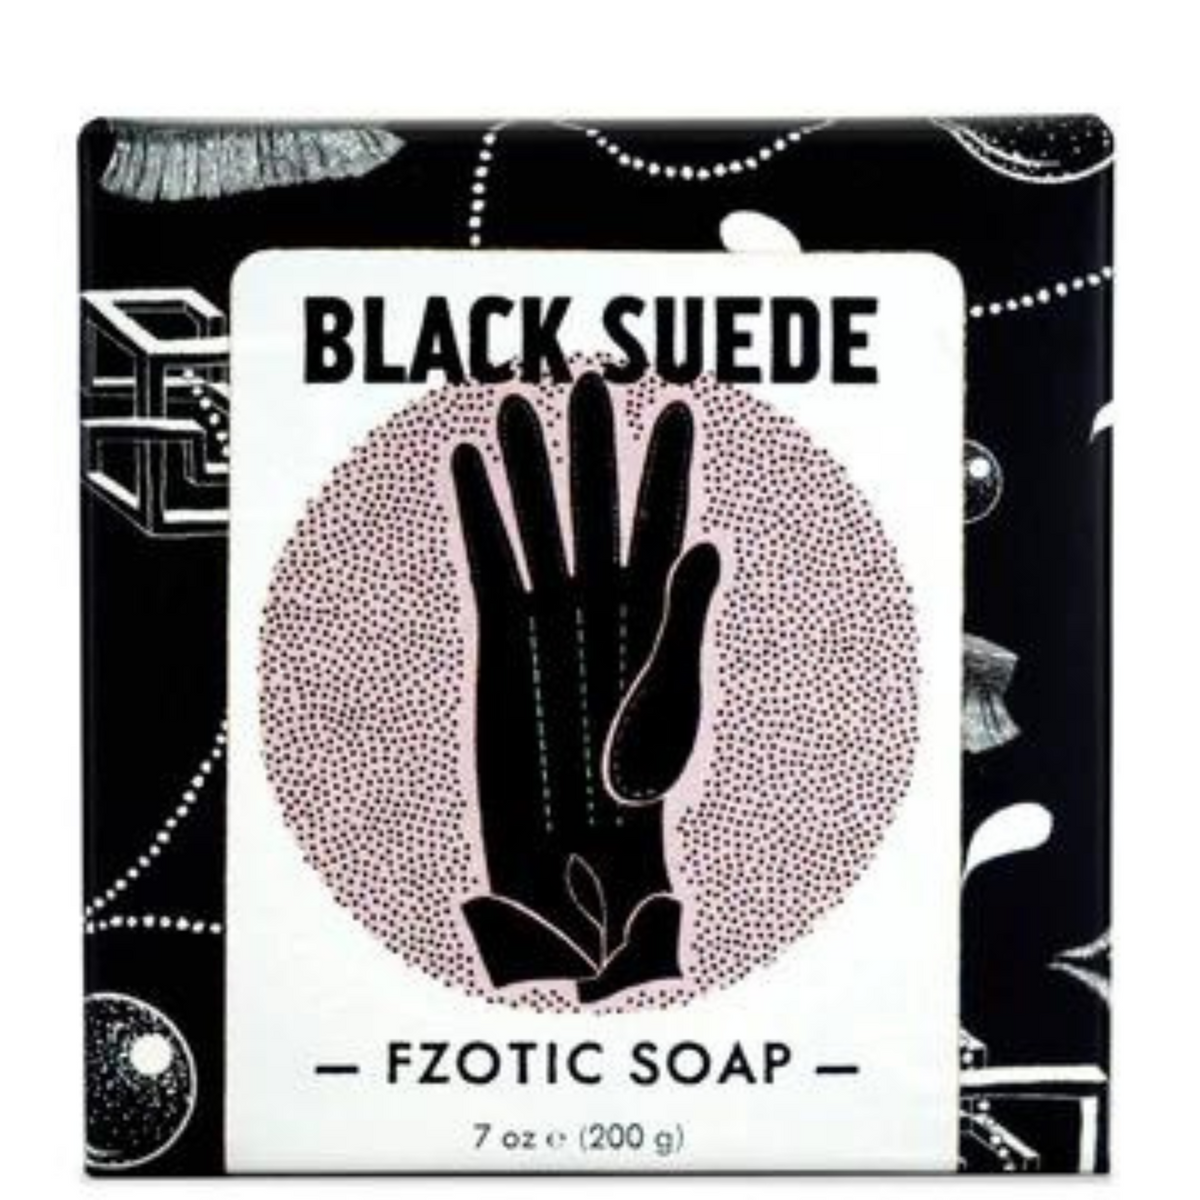 Primary Image of FZOTIC Black Suede Soap (7 oz)